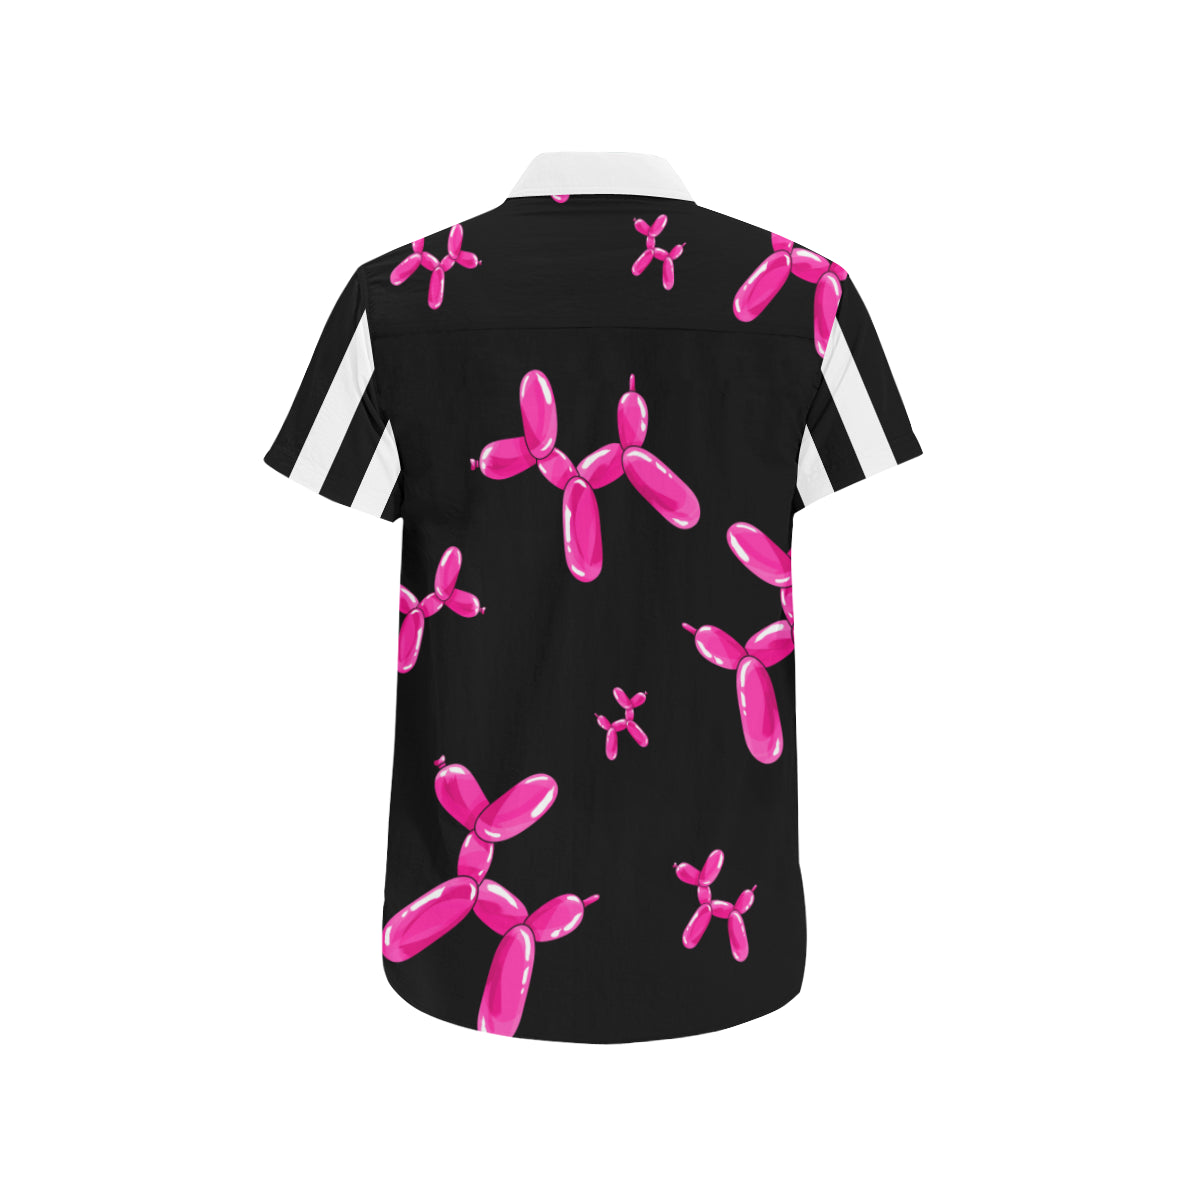 Pippity Pink! - Nate Short Sleeve Shirt (Small-2XL)